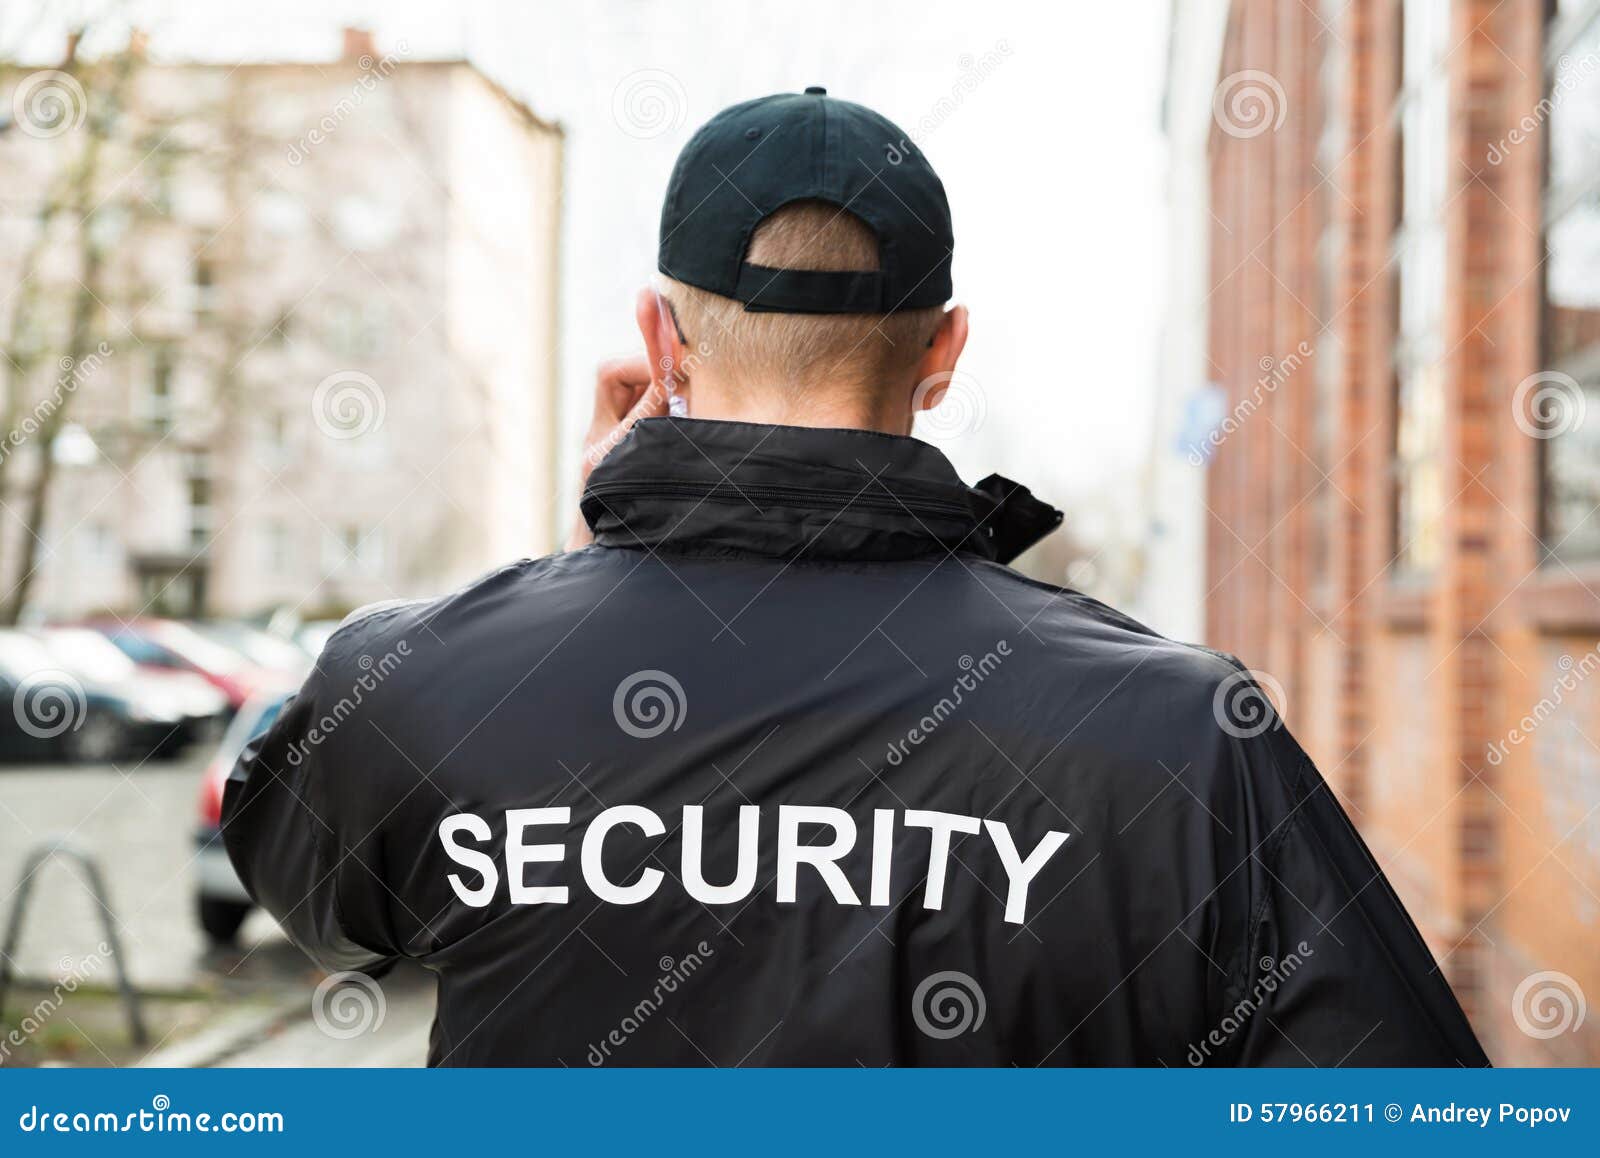 security guard wearing jacket